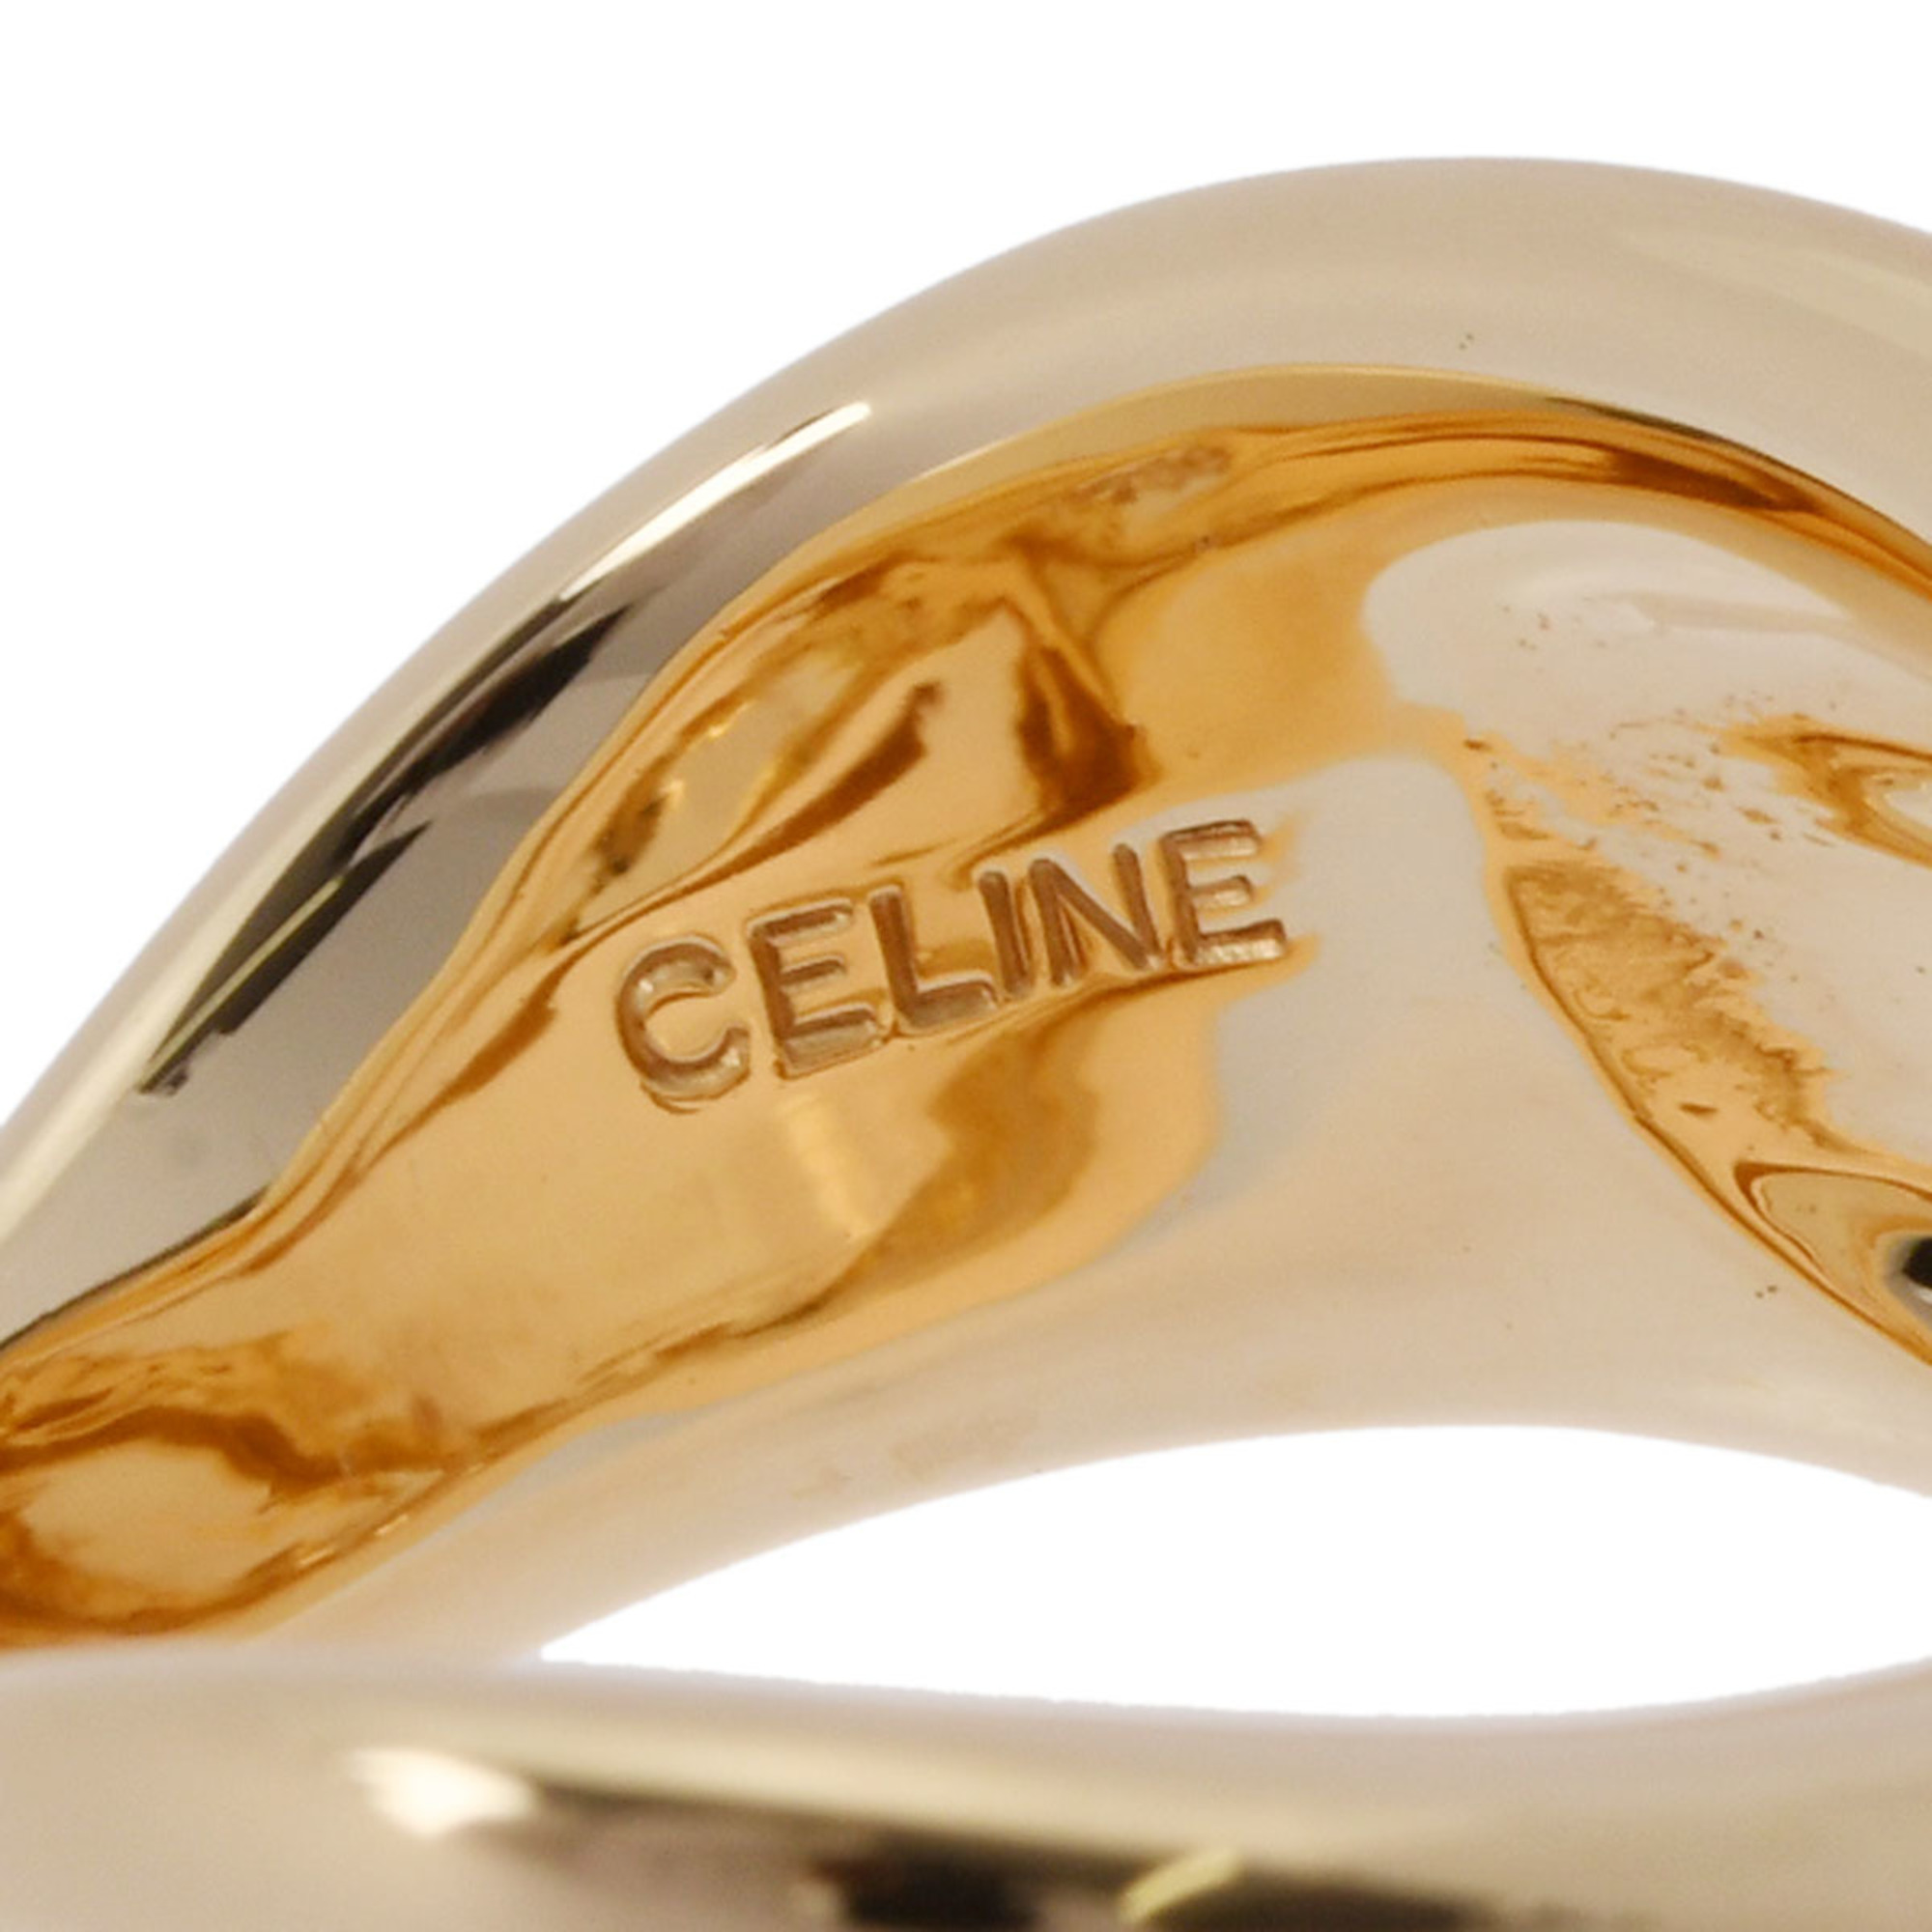 CELINE Celine Double Motif #11 No. 11 Women's K18 Yellow Gold Ring